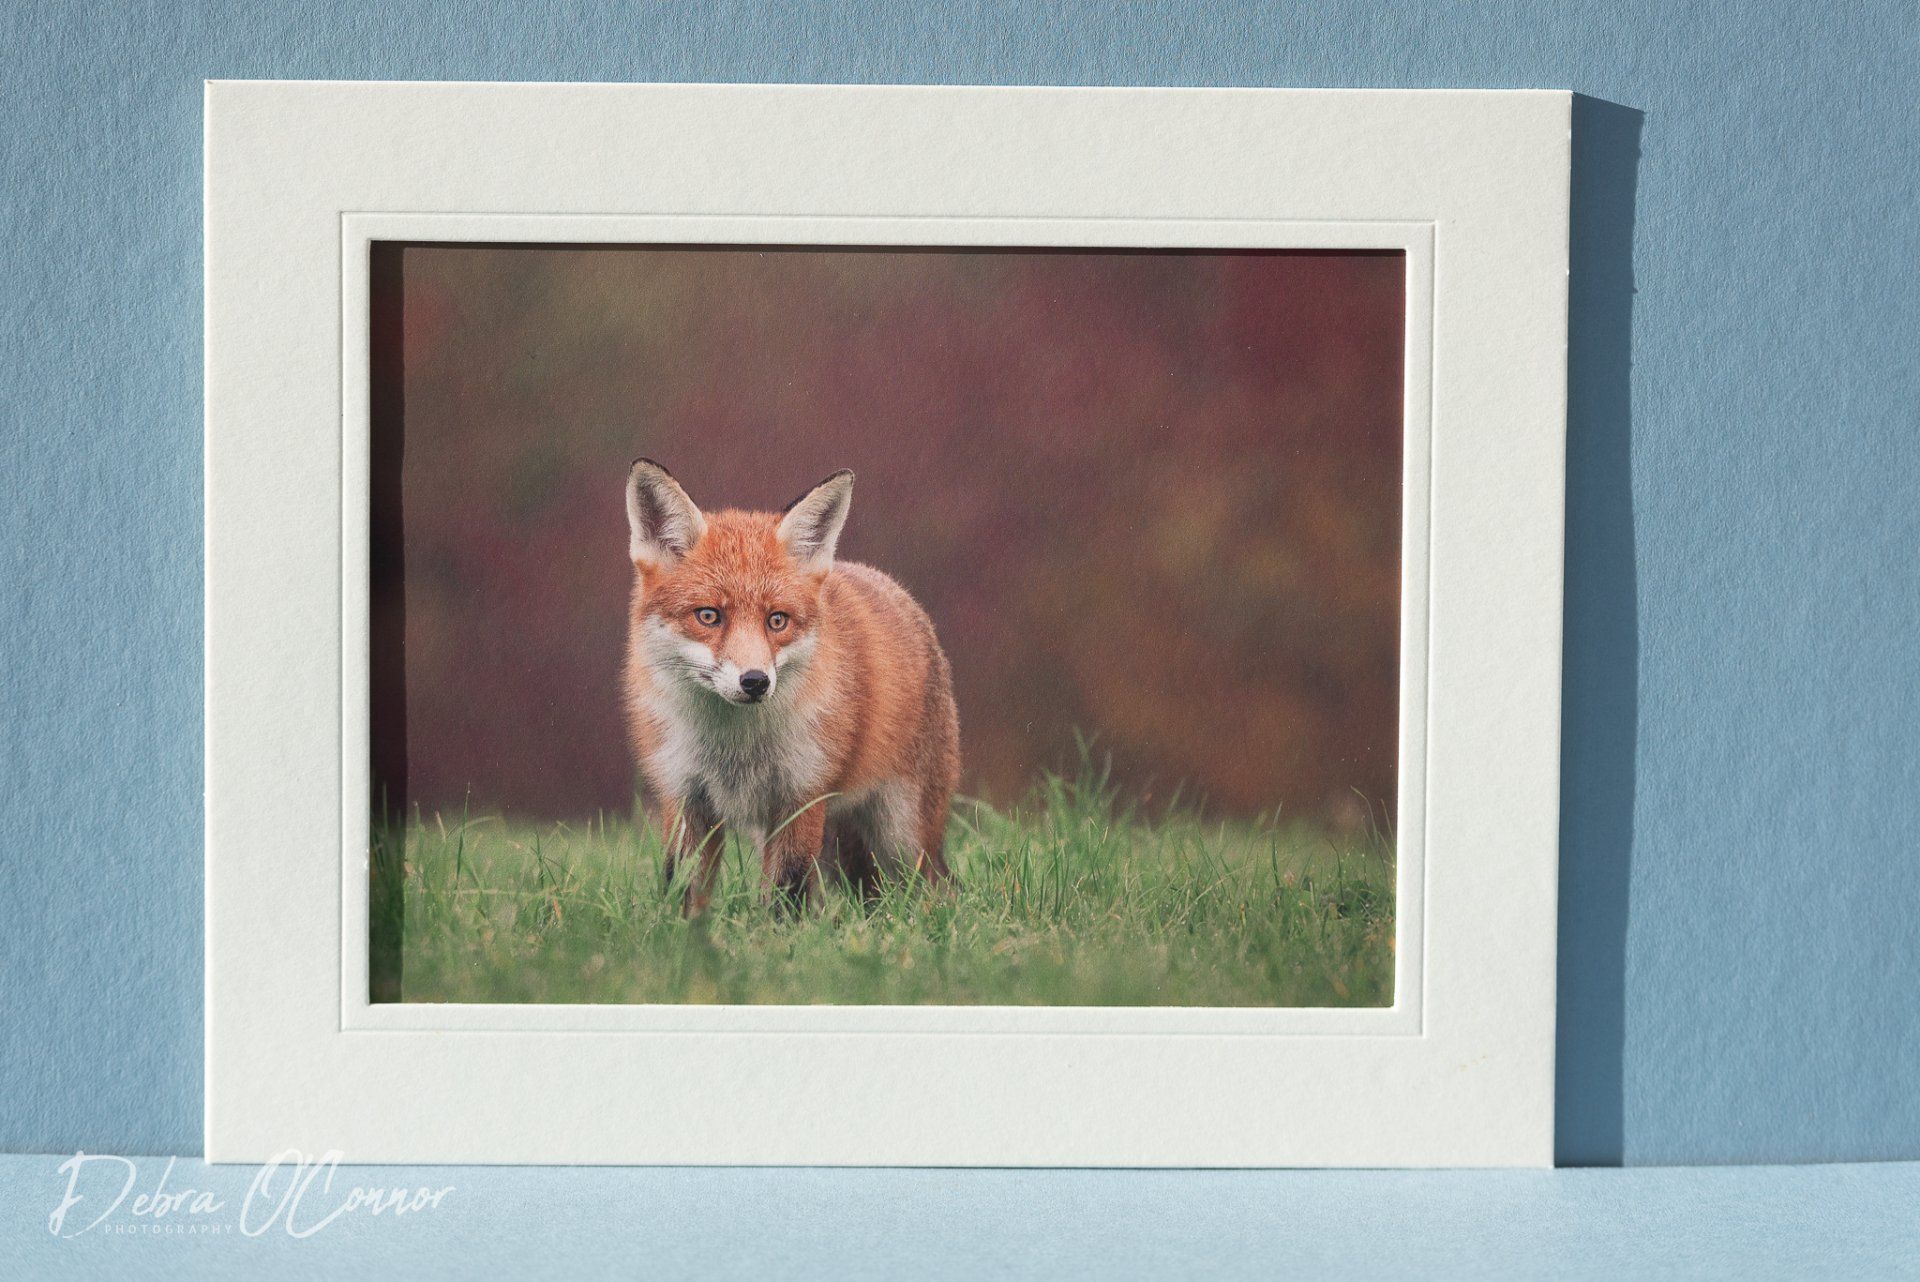 Beautiful urban fox photo for sale